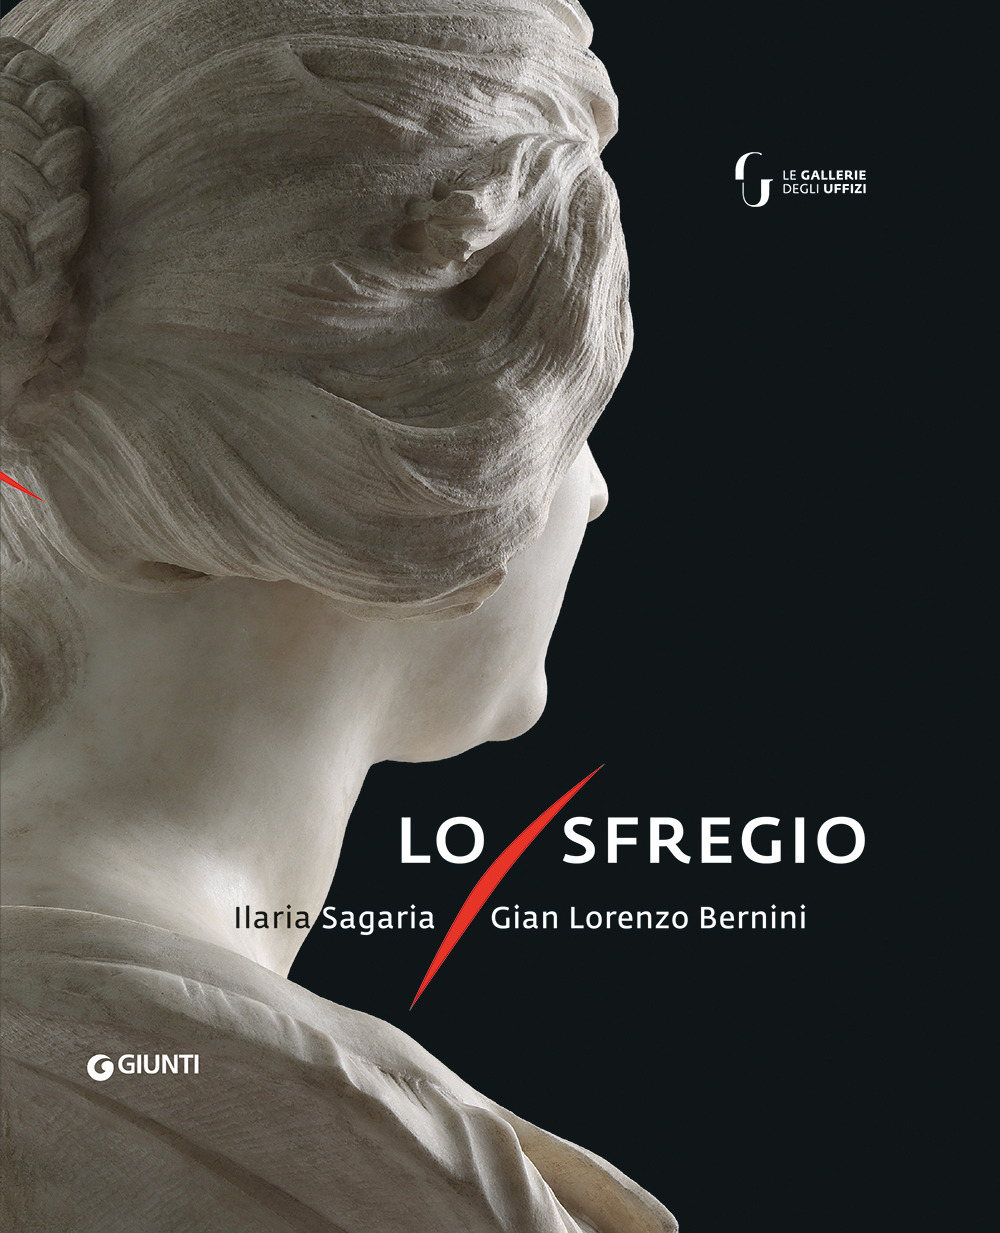 Lo sfregio. Gian Lorenzo Bernini/Ilaria Sagaria